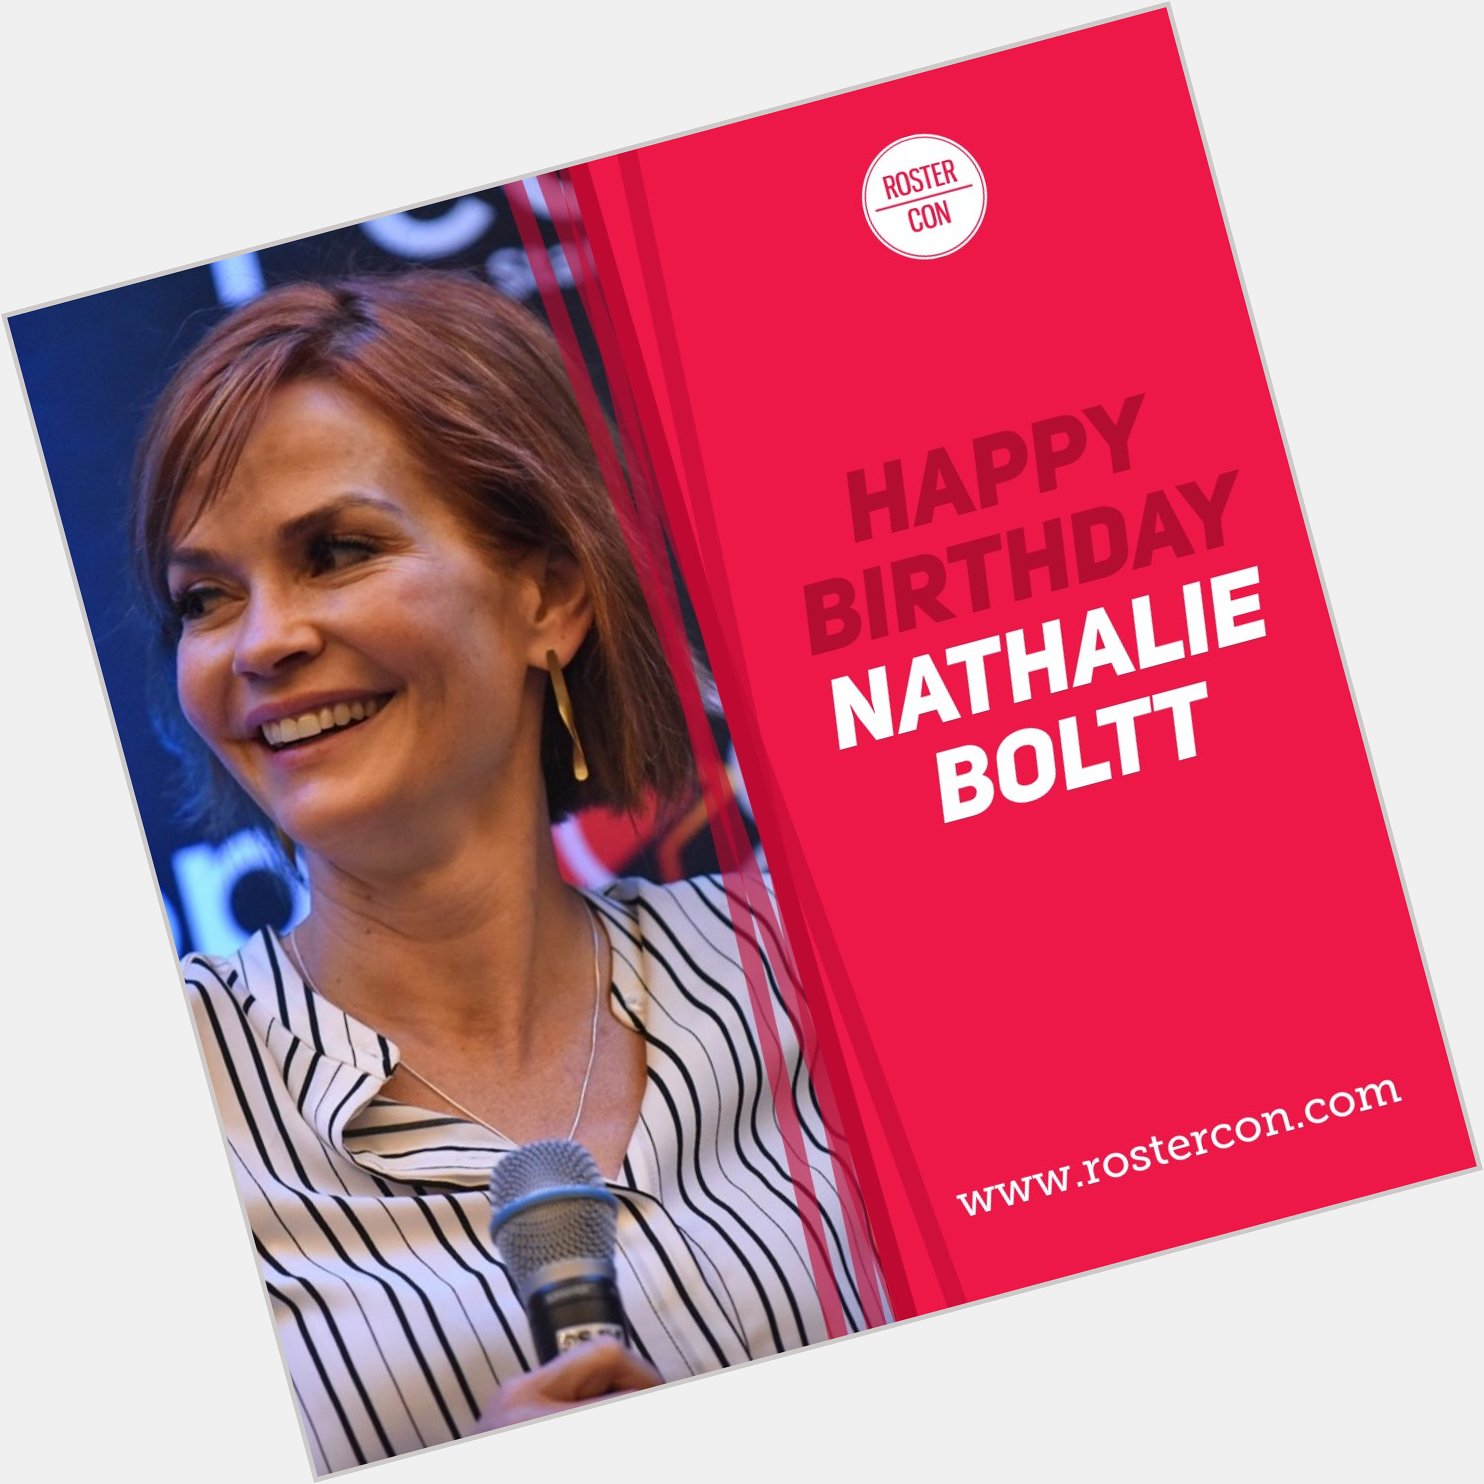  Happy Birthday Nathalie Boltt ! Souvenirs / Throwback :  